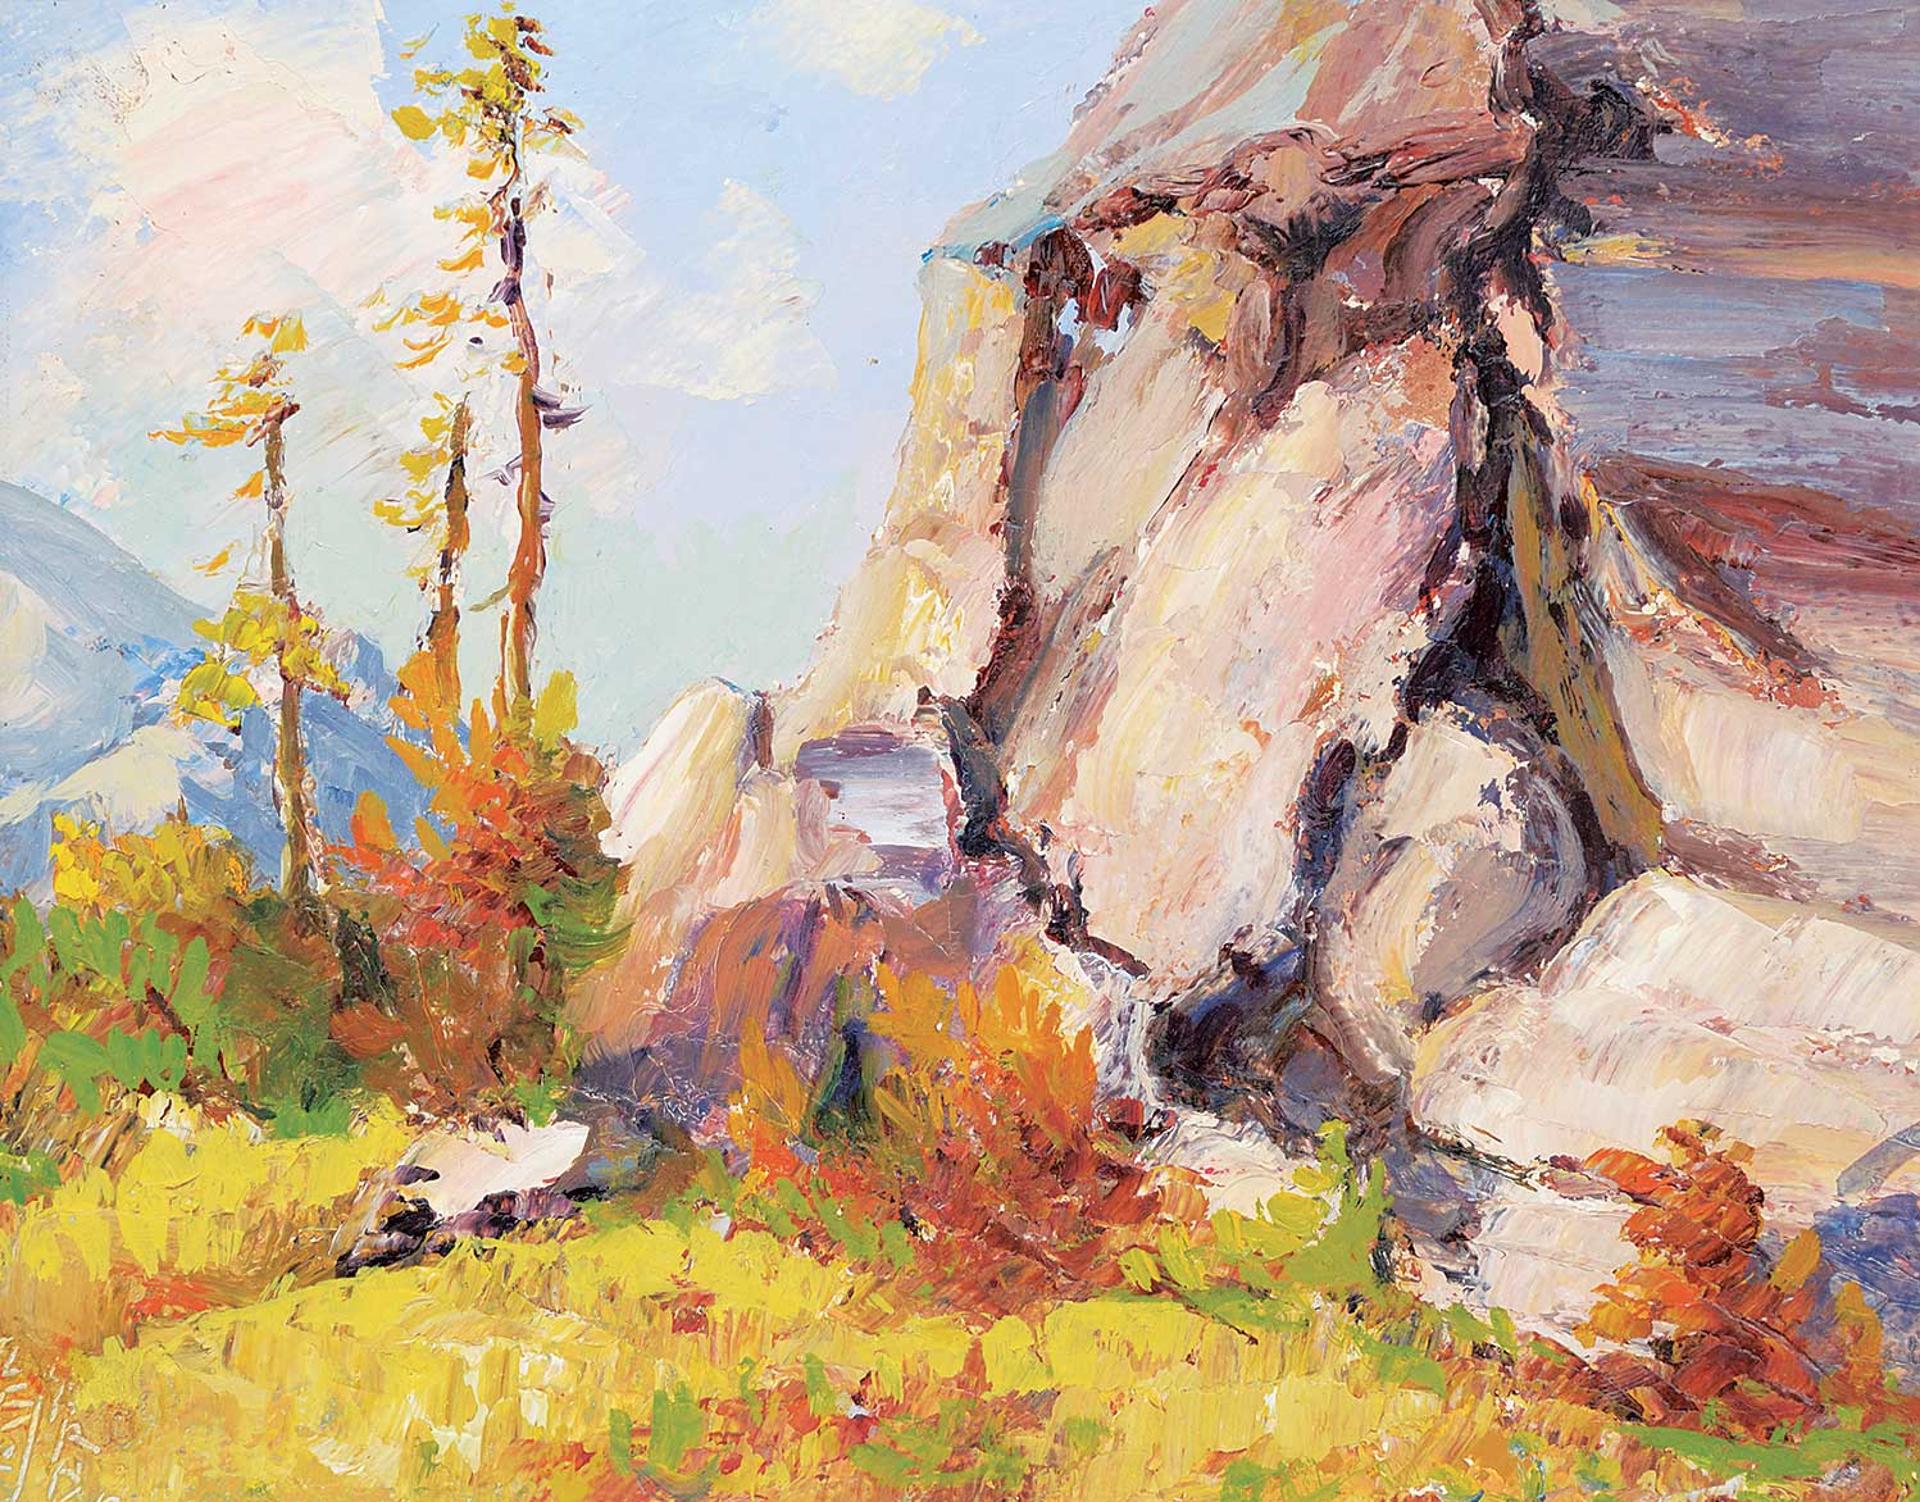 Alec John Garner (1897-1995) - Rocks Near Creston B.C.